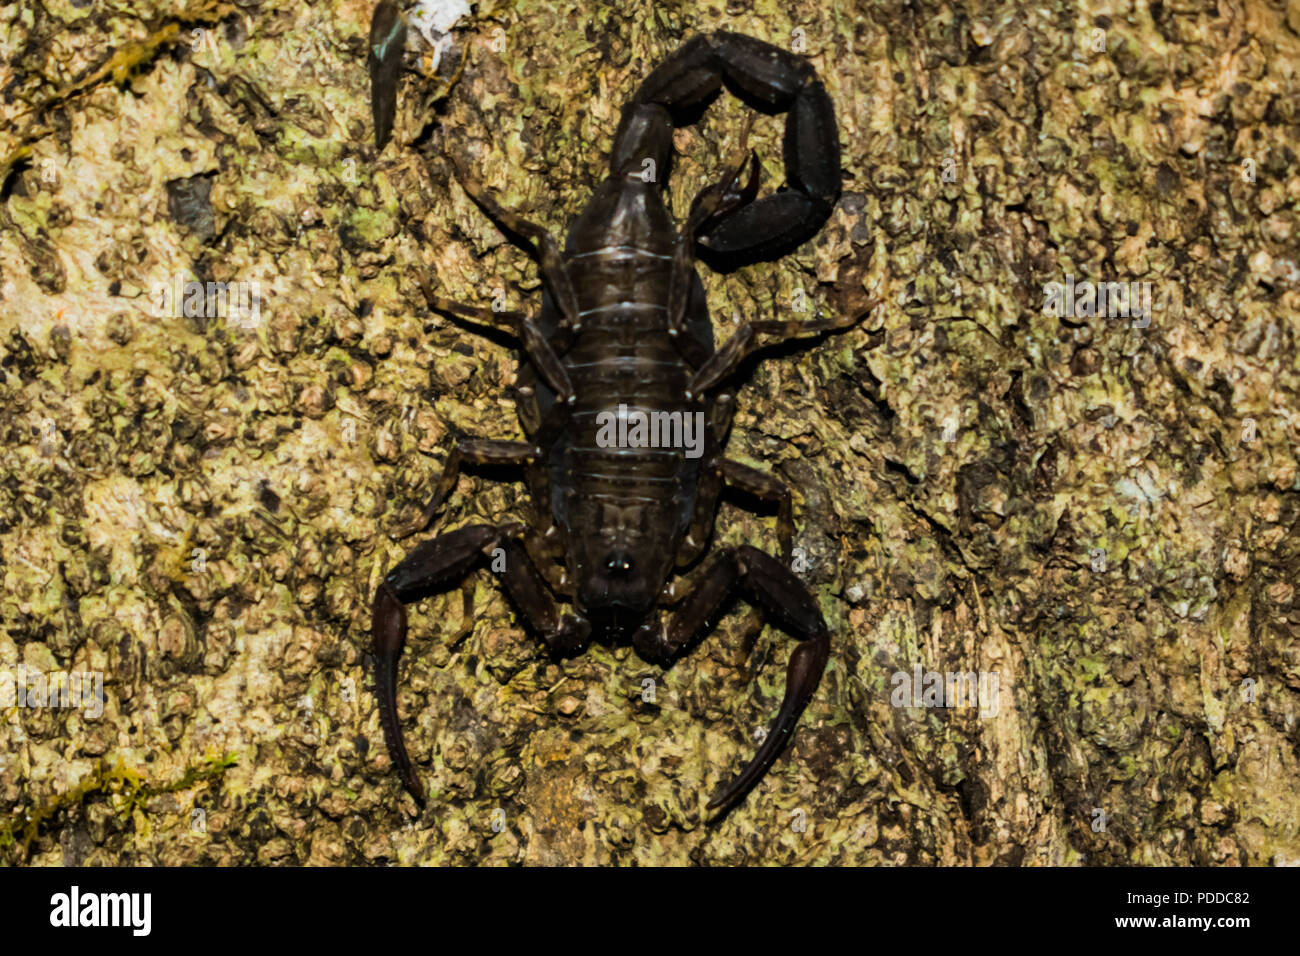 Tiny scorpion the amazon jungle. Pequeño escorpion en el bosque amazonico. Stock Photo